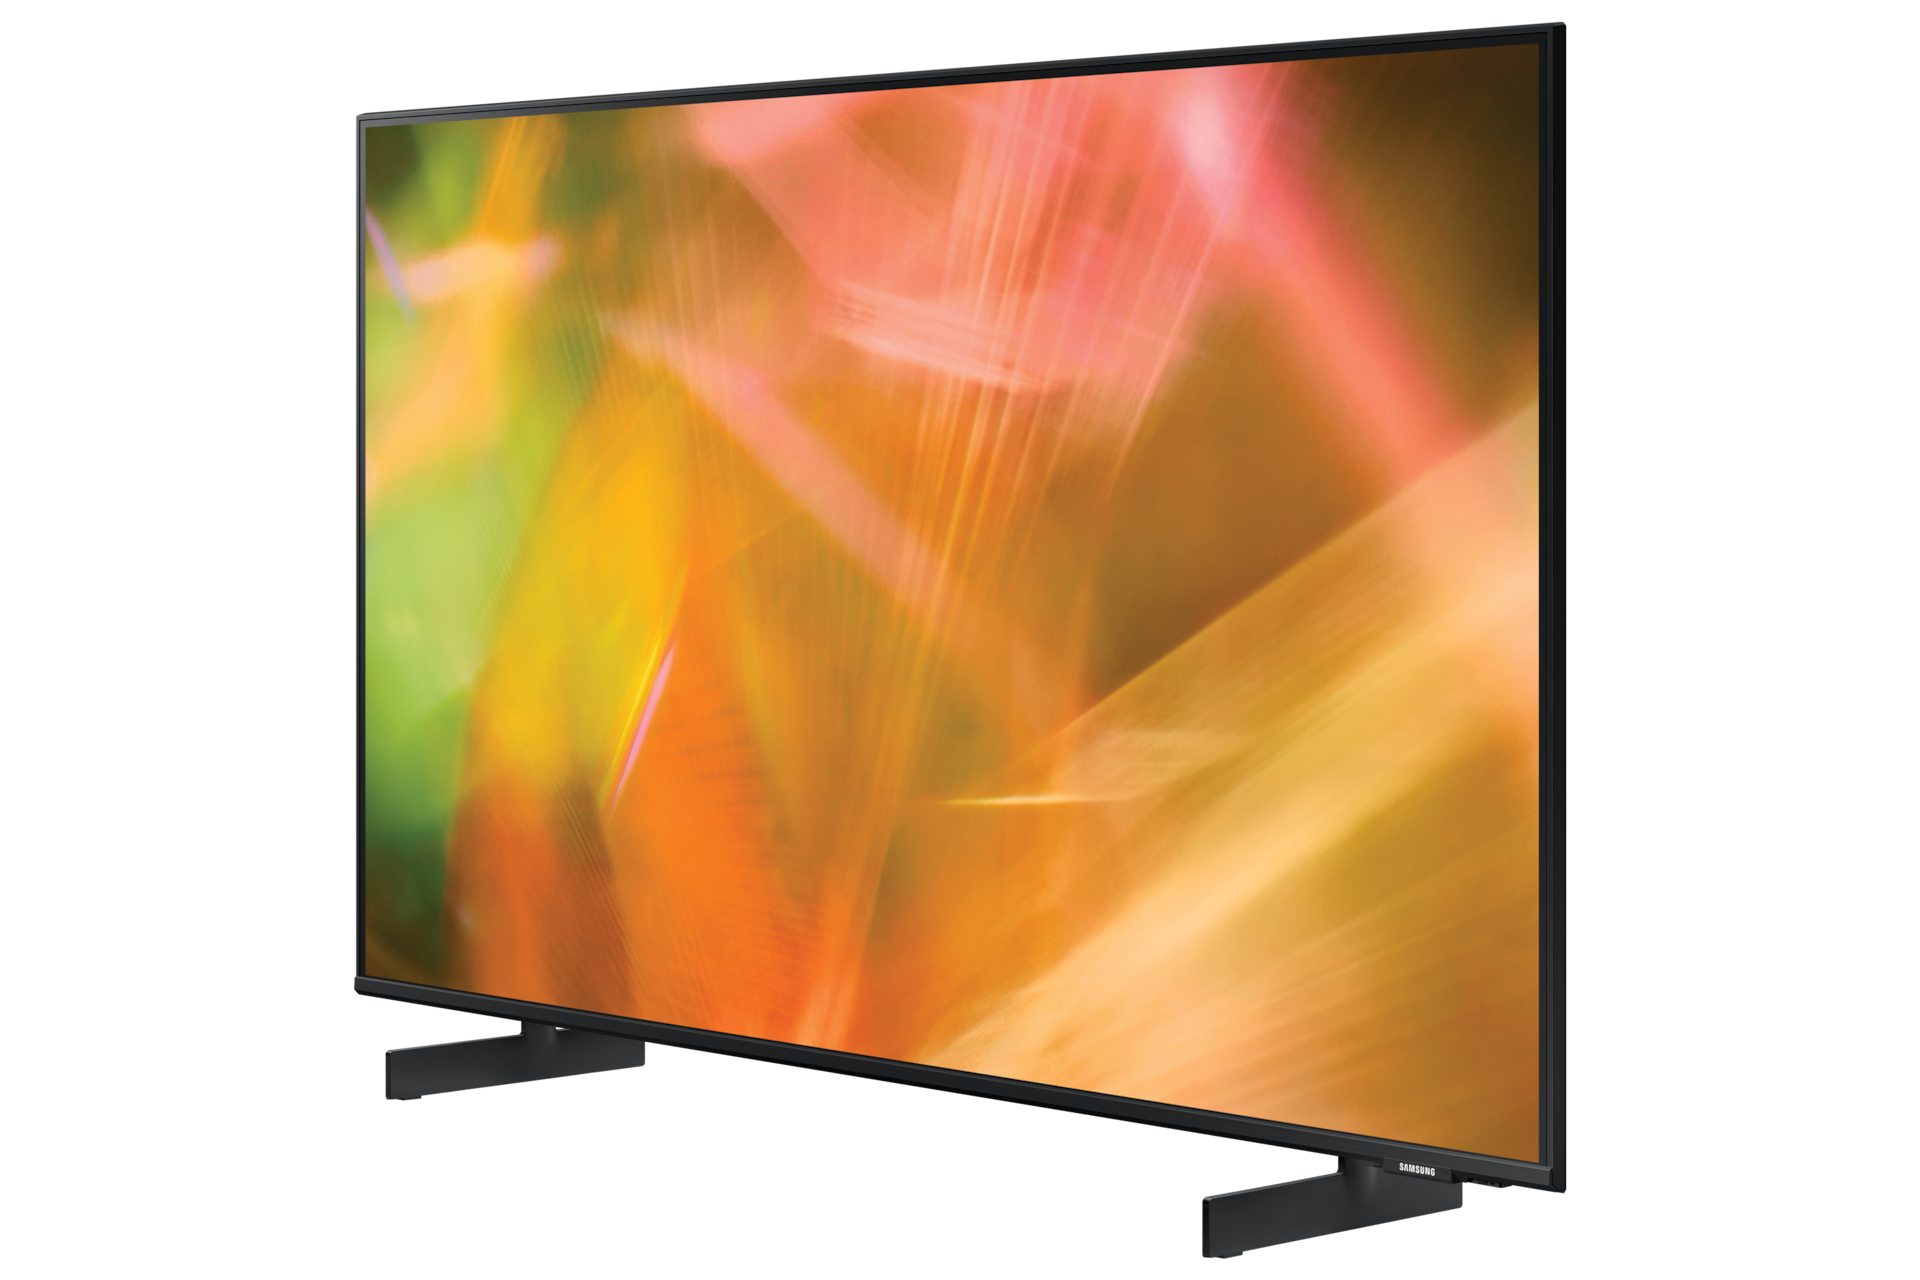 VENTA Y DISTRIBUCIÓN DE TELEVISORES / TVS SAMSUNG TELEVISOR SAMSUNG FLAT LED  SMART TV 43 PULGADAS UHD 4K /3,840 X 2,160 / BLUETOOTH / DVB-T2 / HDMI X 3  / USB X